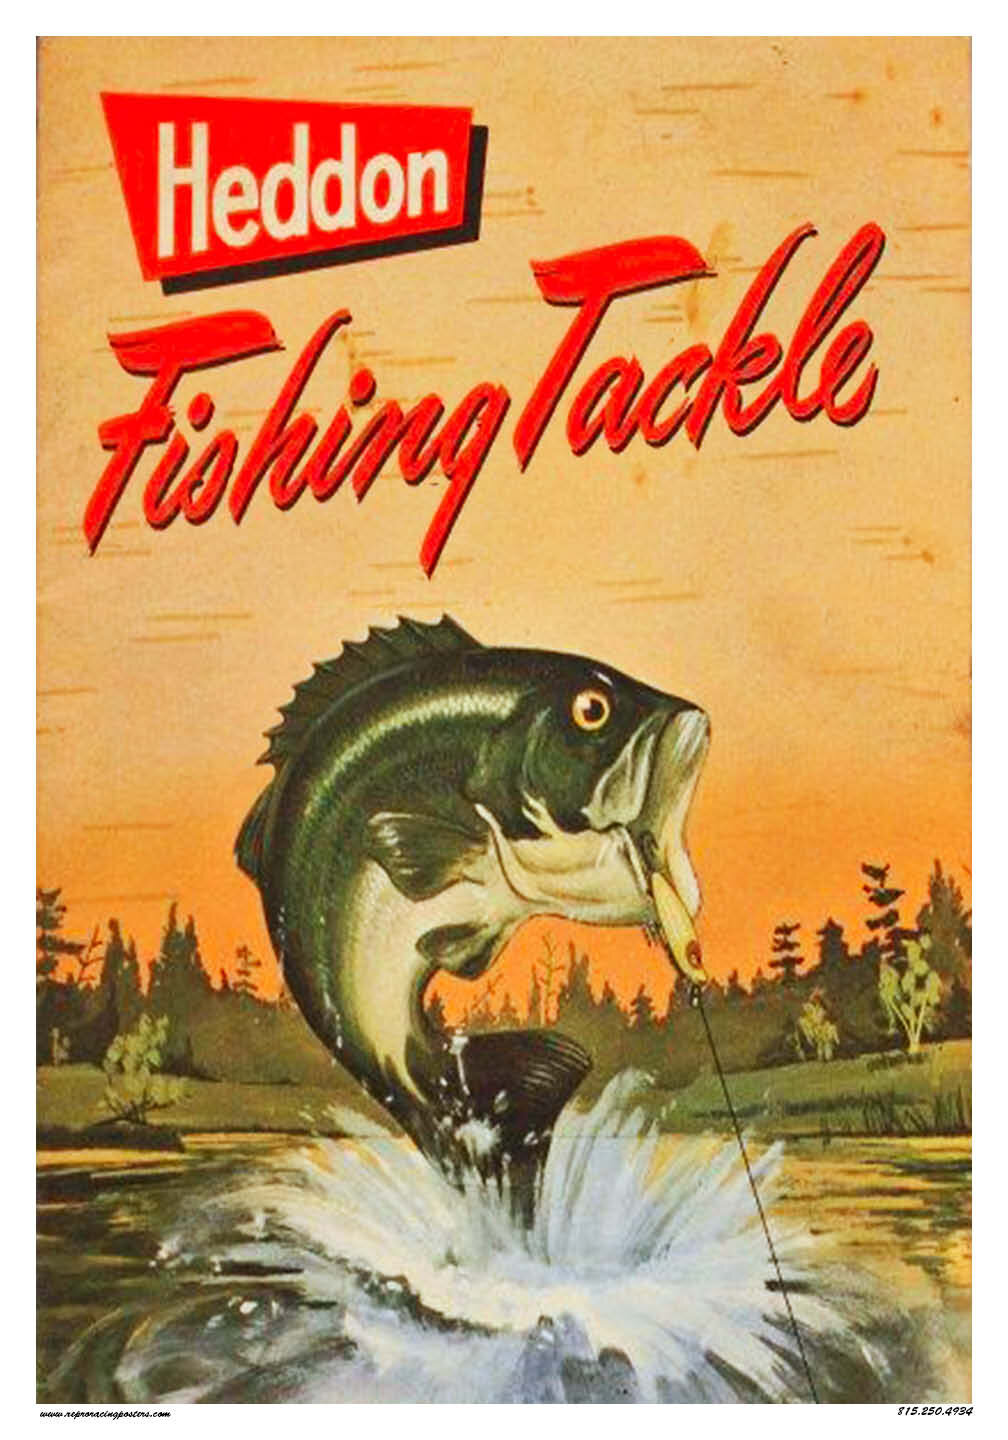 Heddon Fishing Tackle — Vintage Reproduction Racing Posters